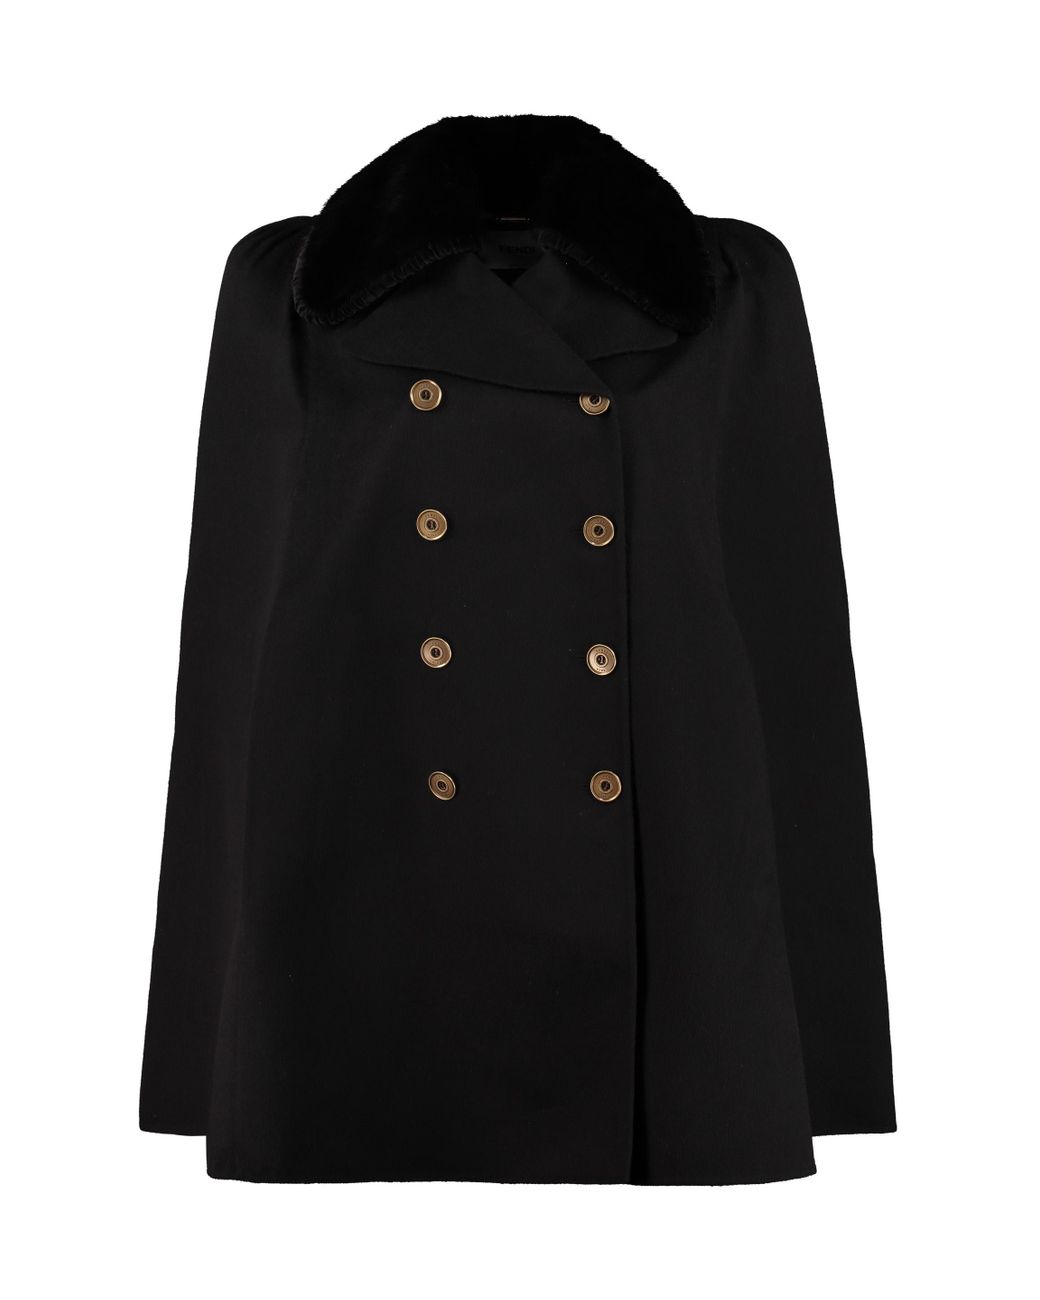 Fendi Fur Collar Wool Cape Coat in Black - Lyst